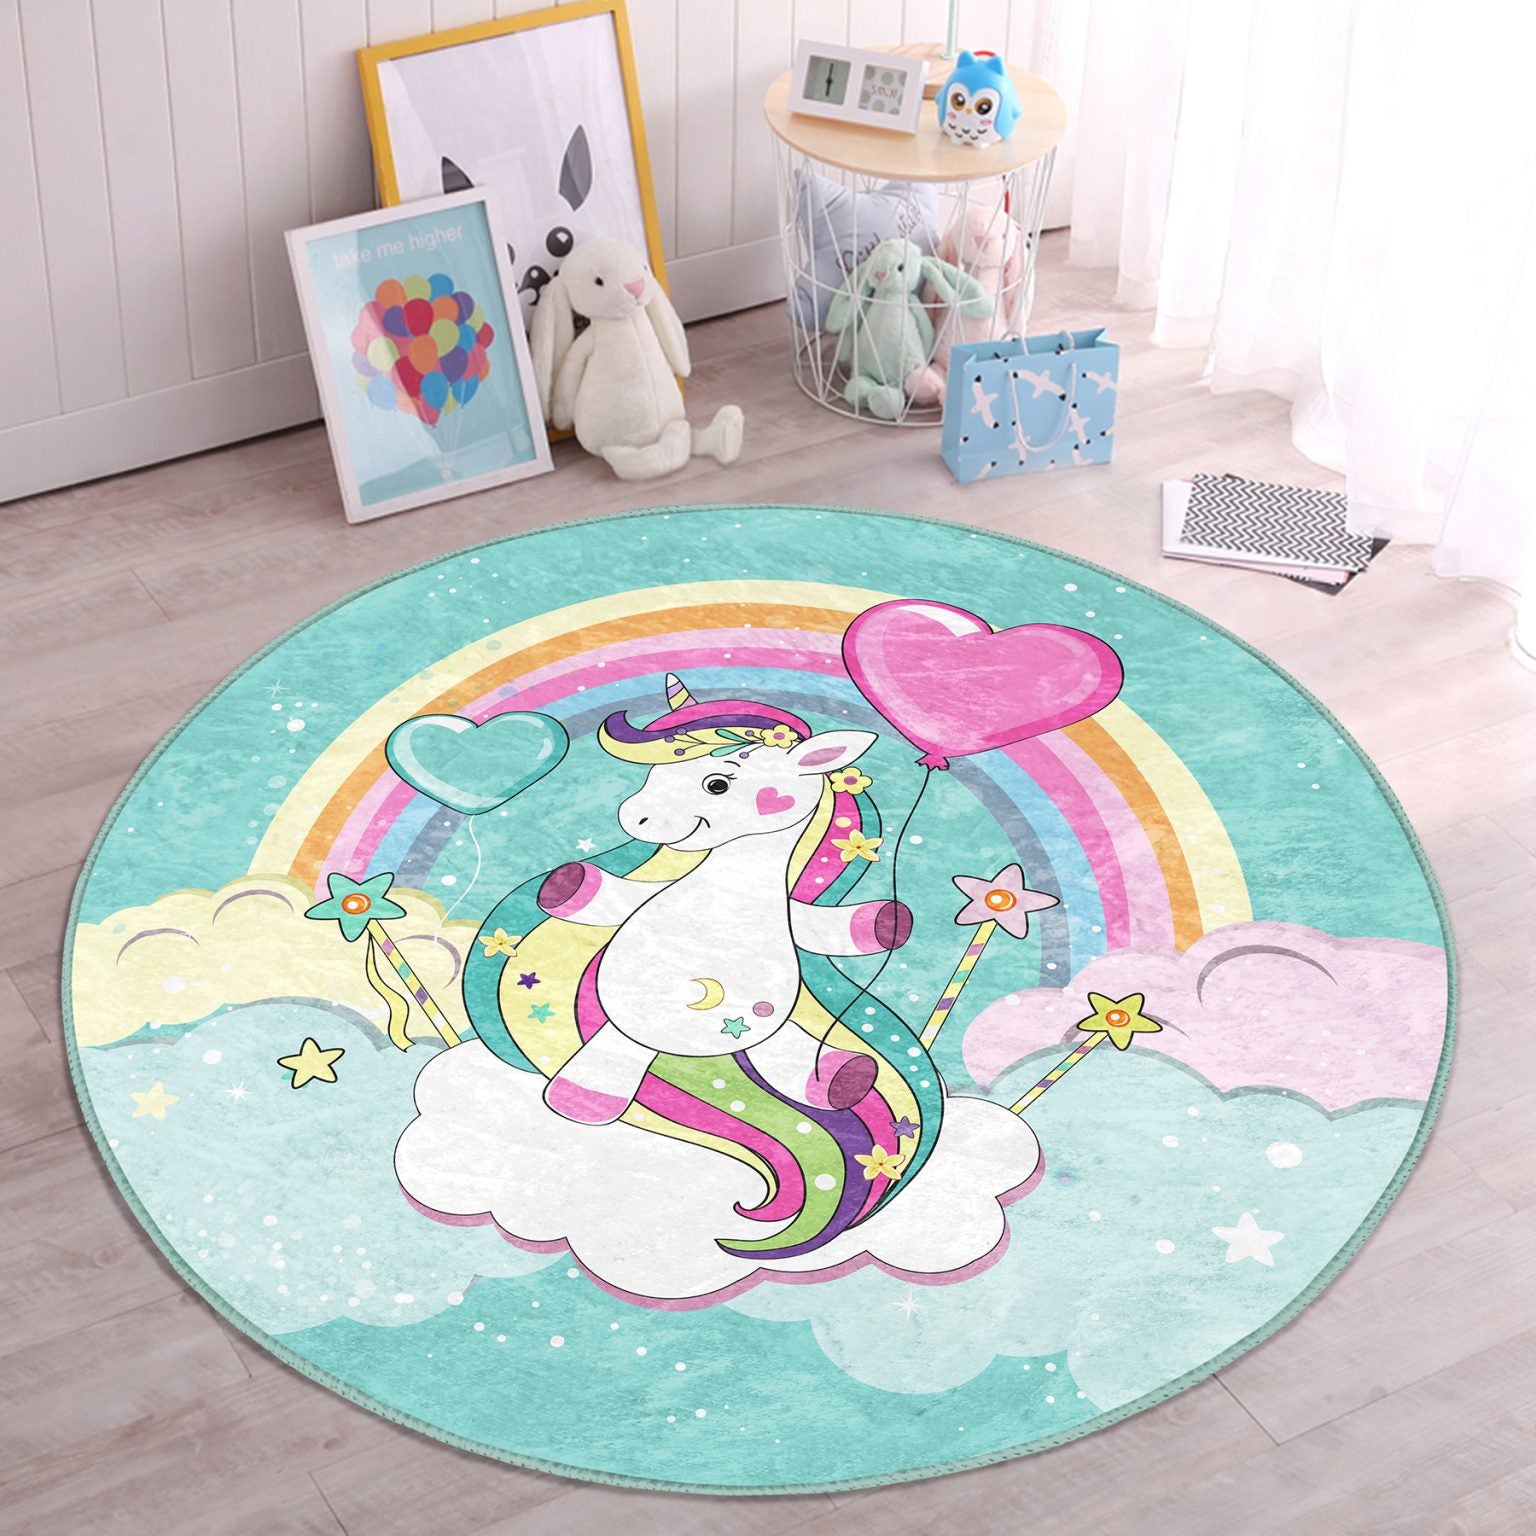 Magical Unicorn Nursery Floor Covering